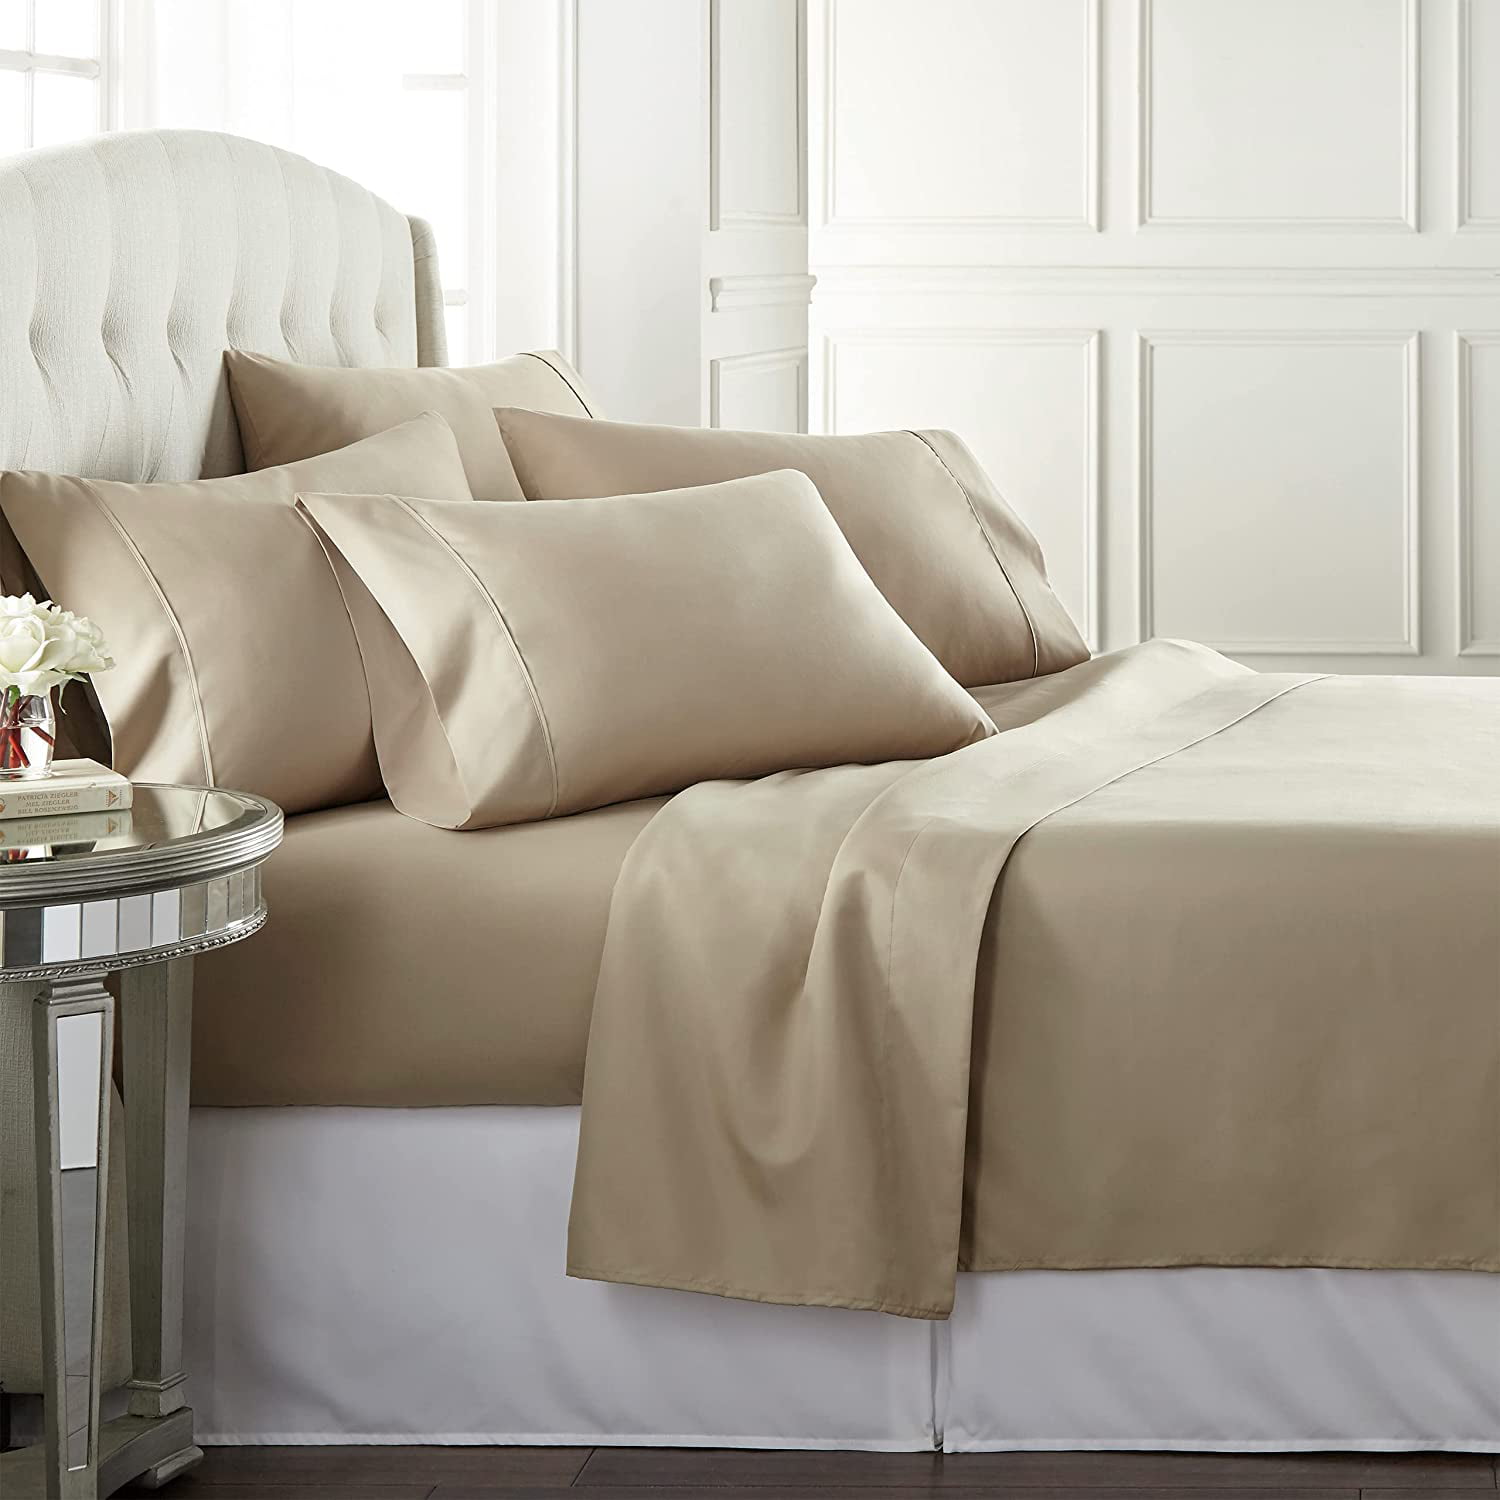 4PCS Hotel Luxury Soft 1800 Series Premium Bed Sheets Set King Size-Black Color 